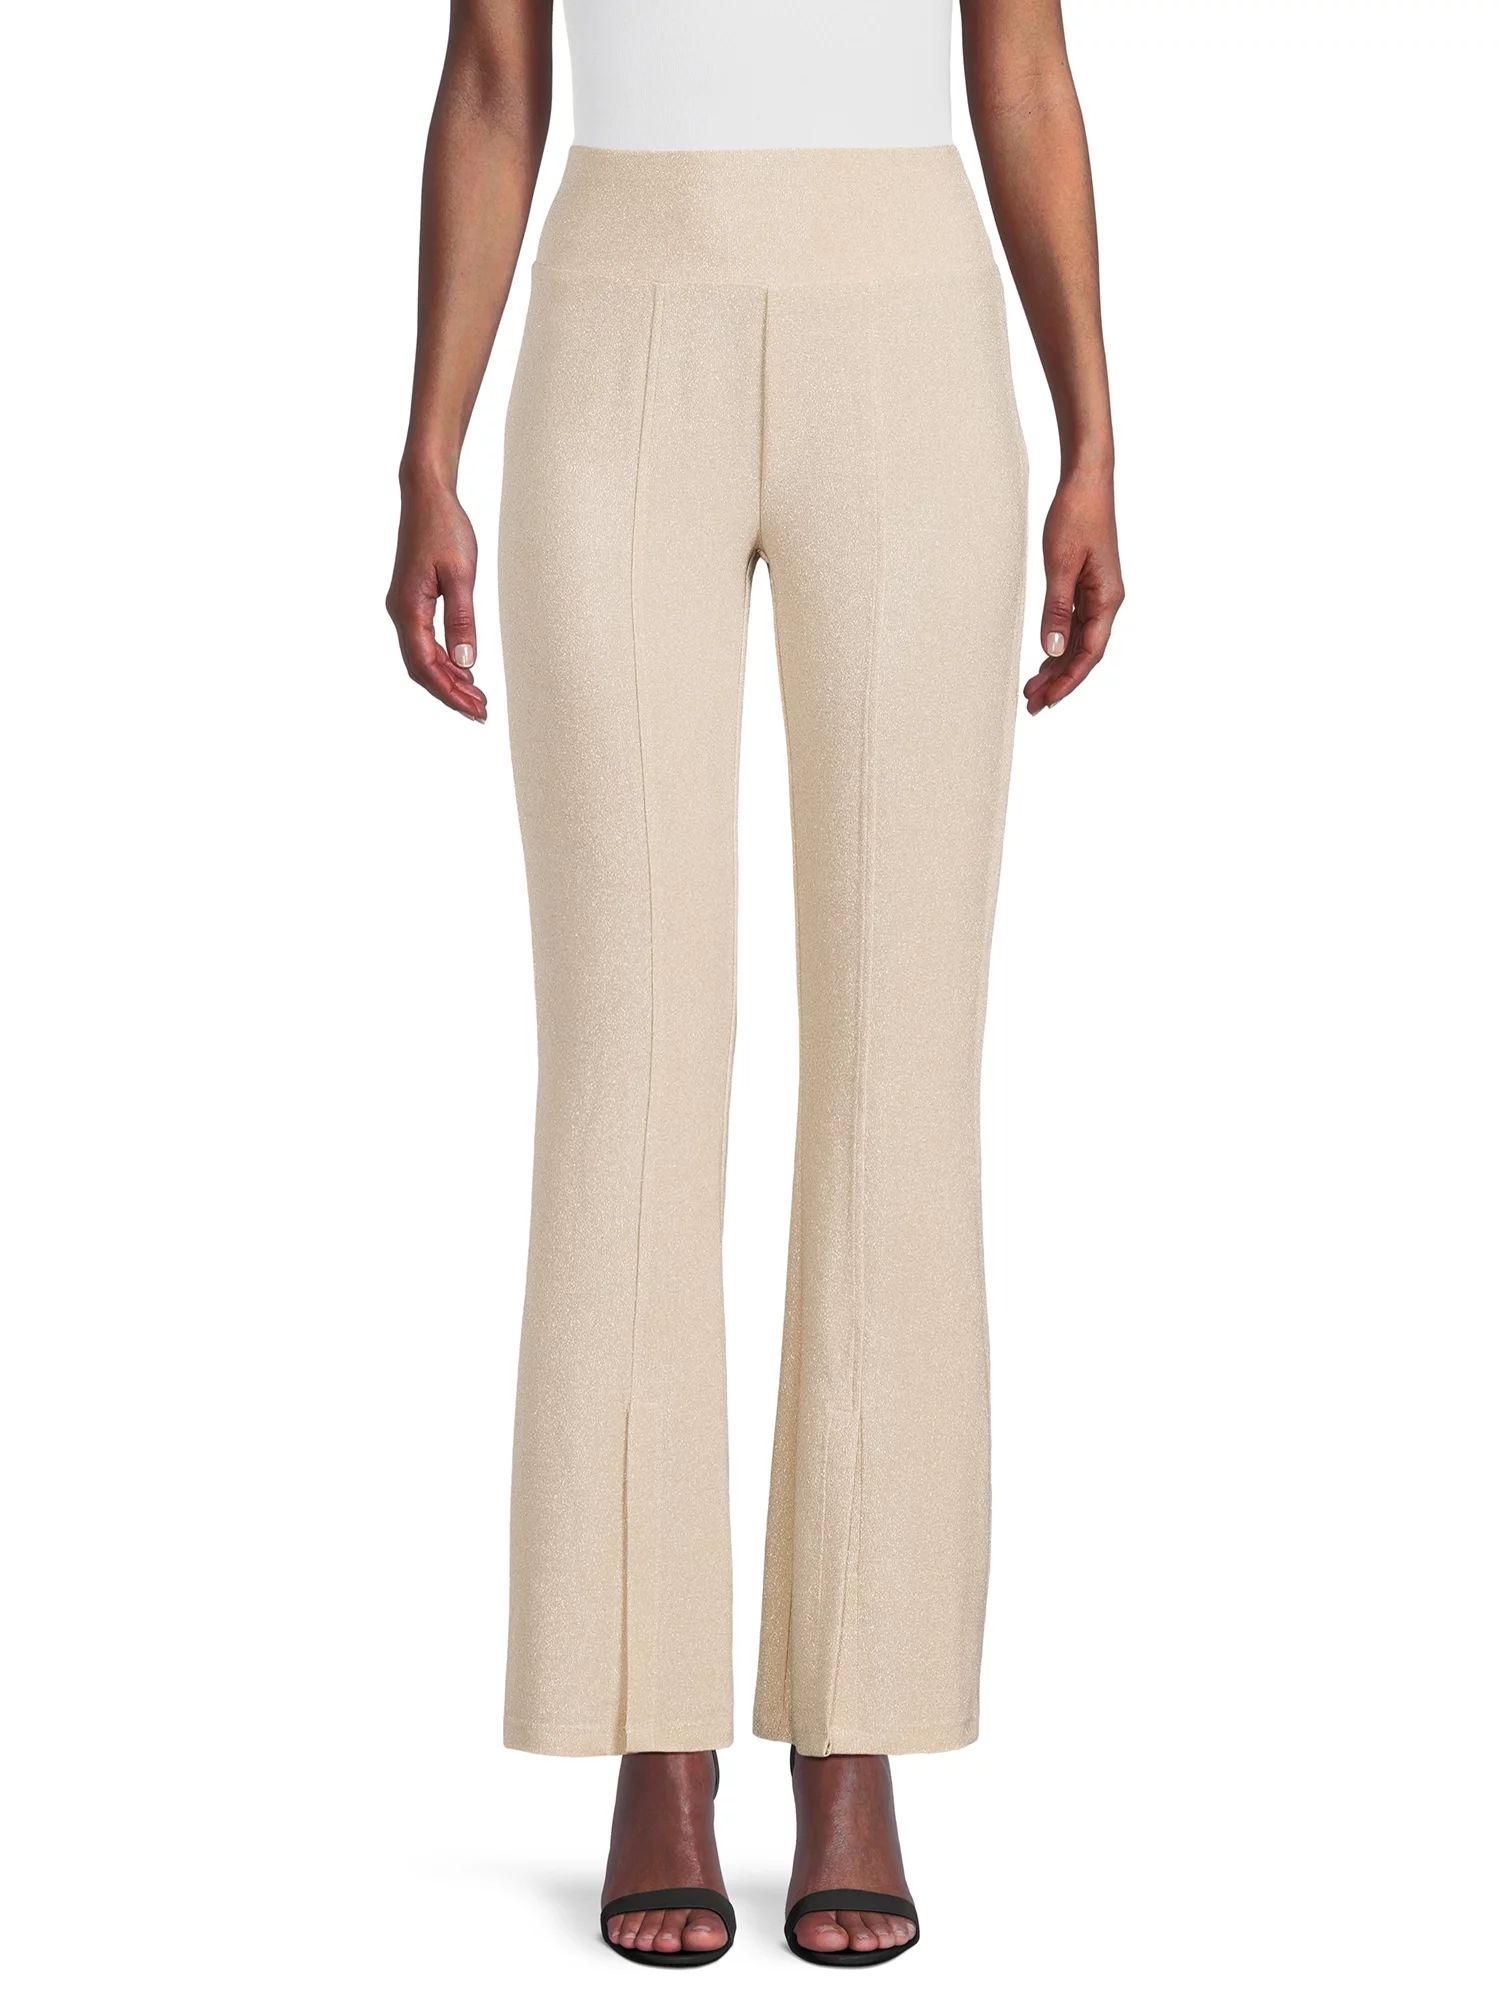 Madden NYC Women's Metallic Pants, 31” Inseam, Sizes XS-XXXL | Walmart (US)